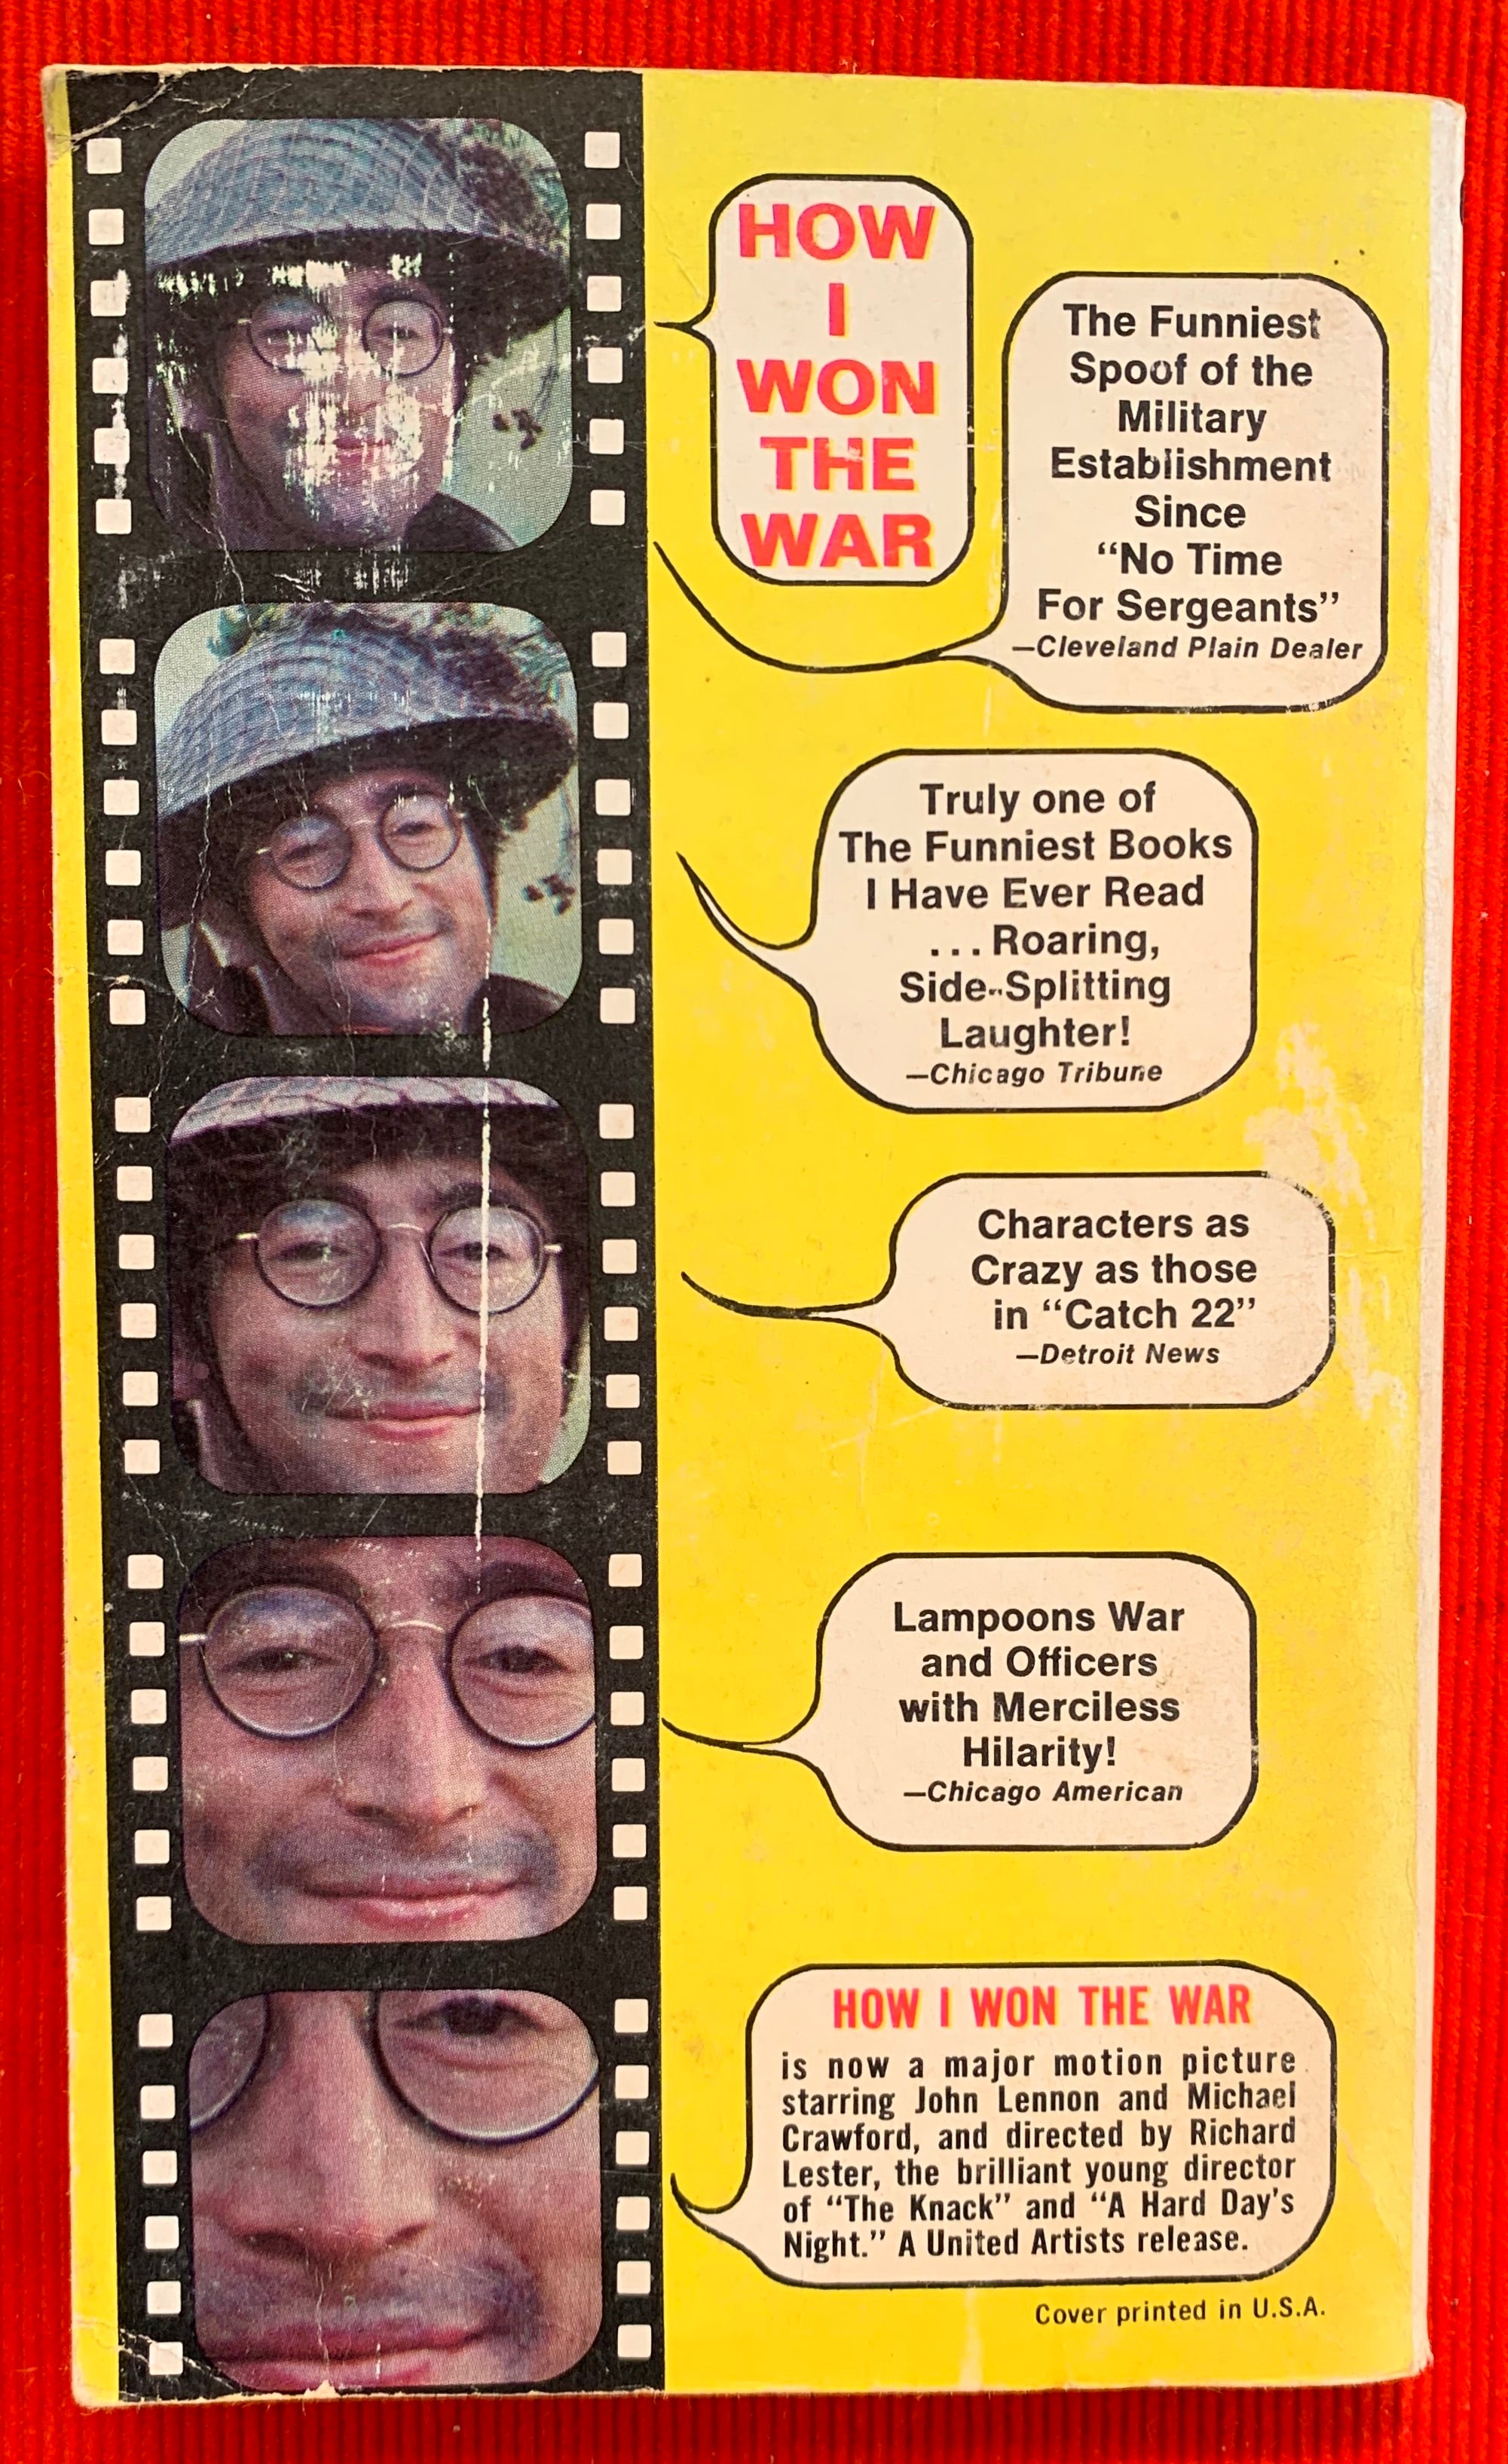 "How I Won the War" By Patrick Ryan Movie Tie-In Starring John Lennon